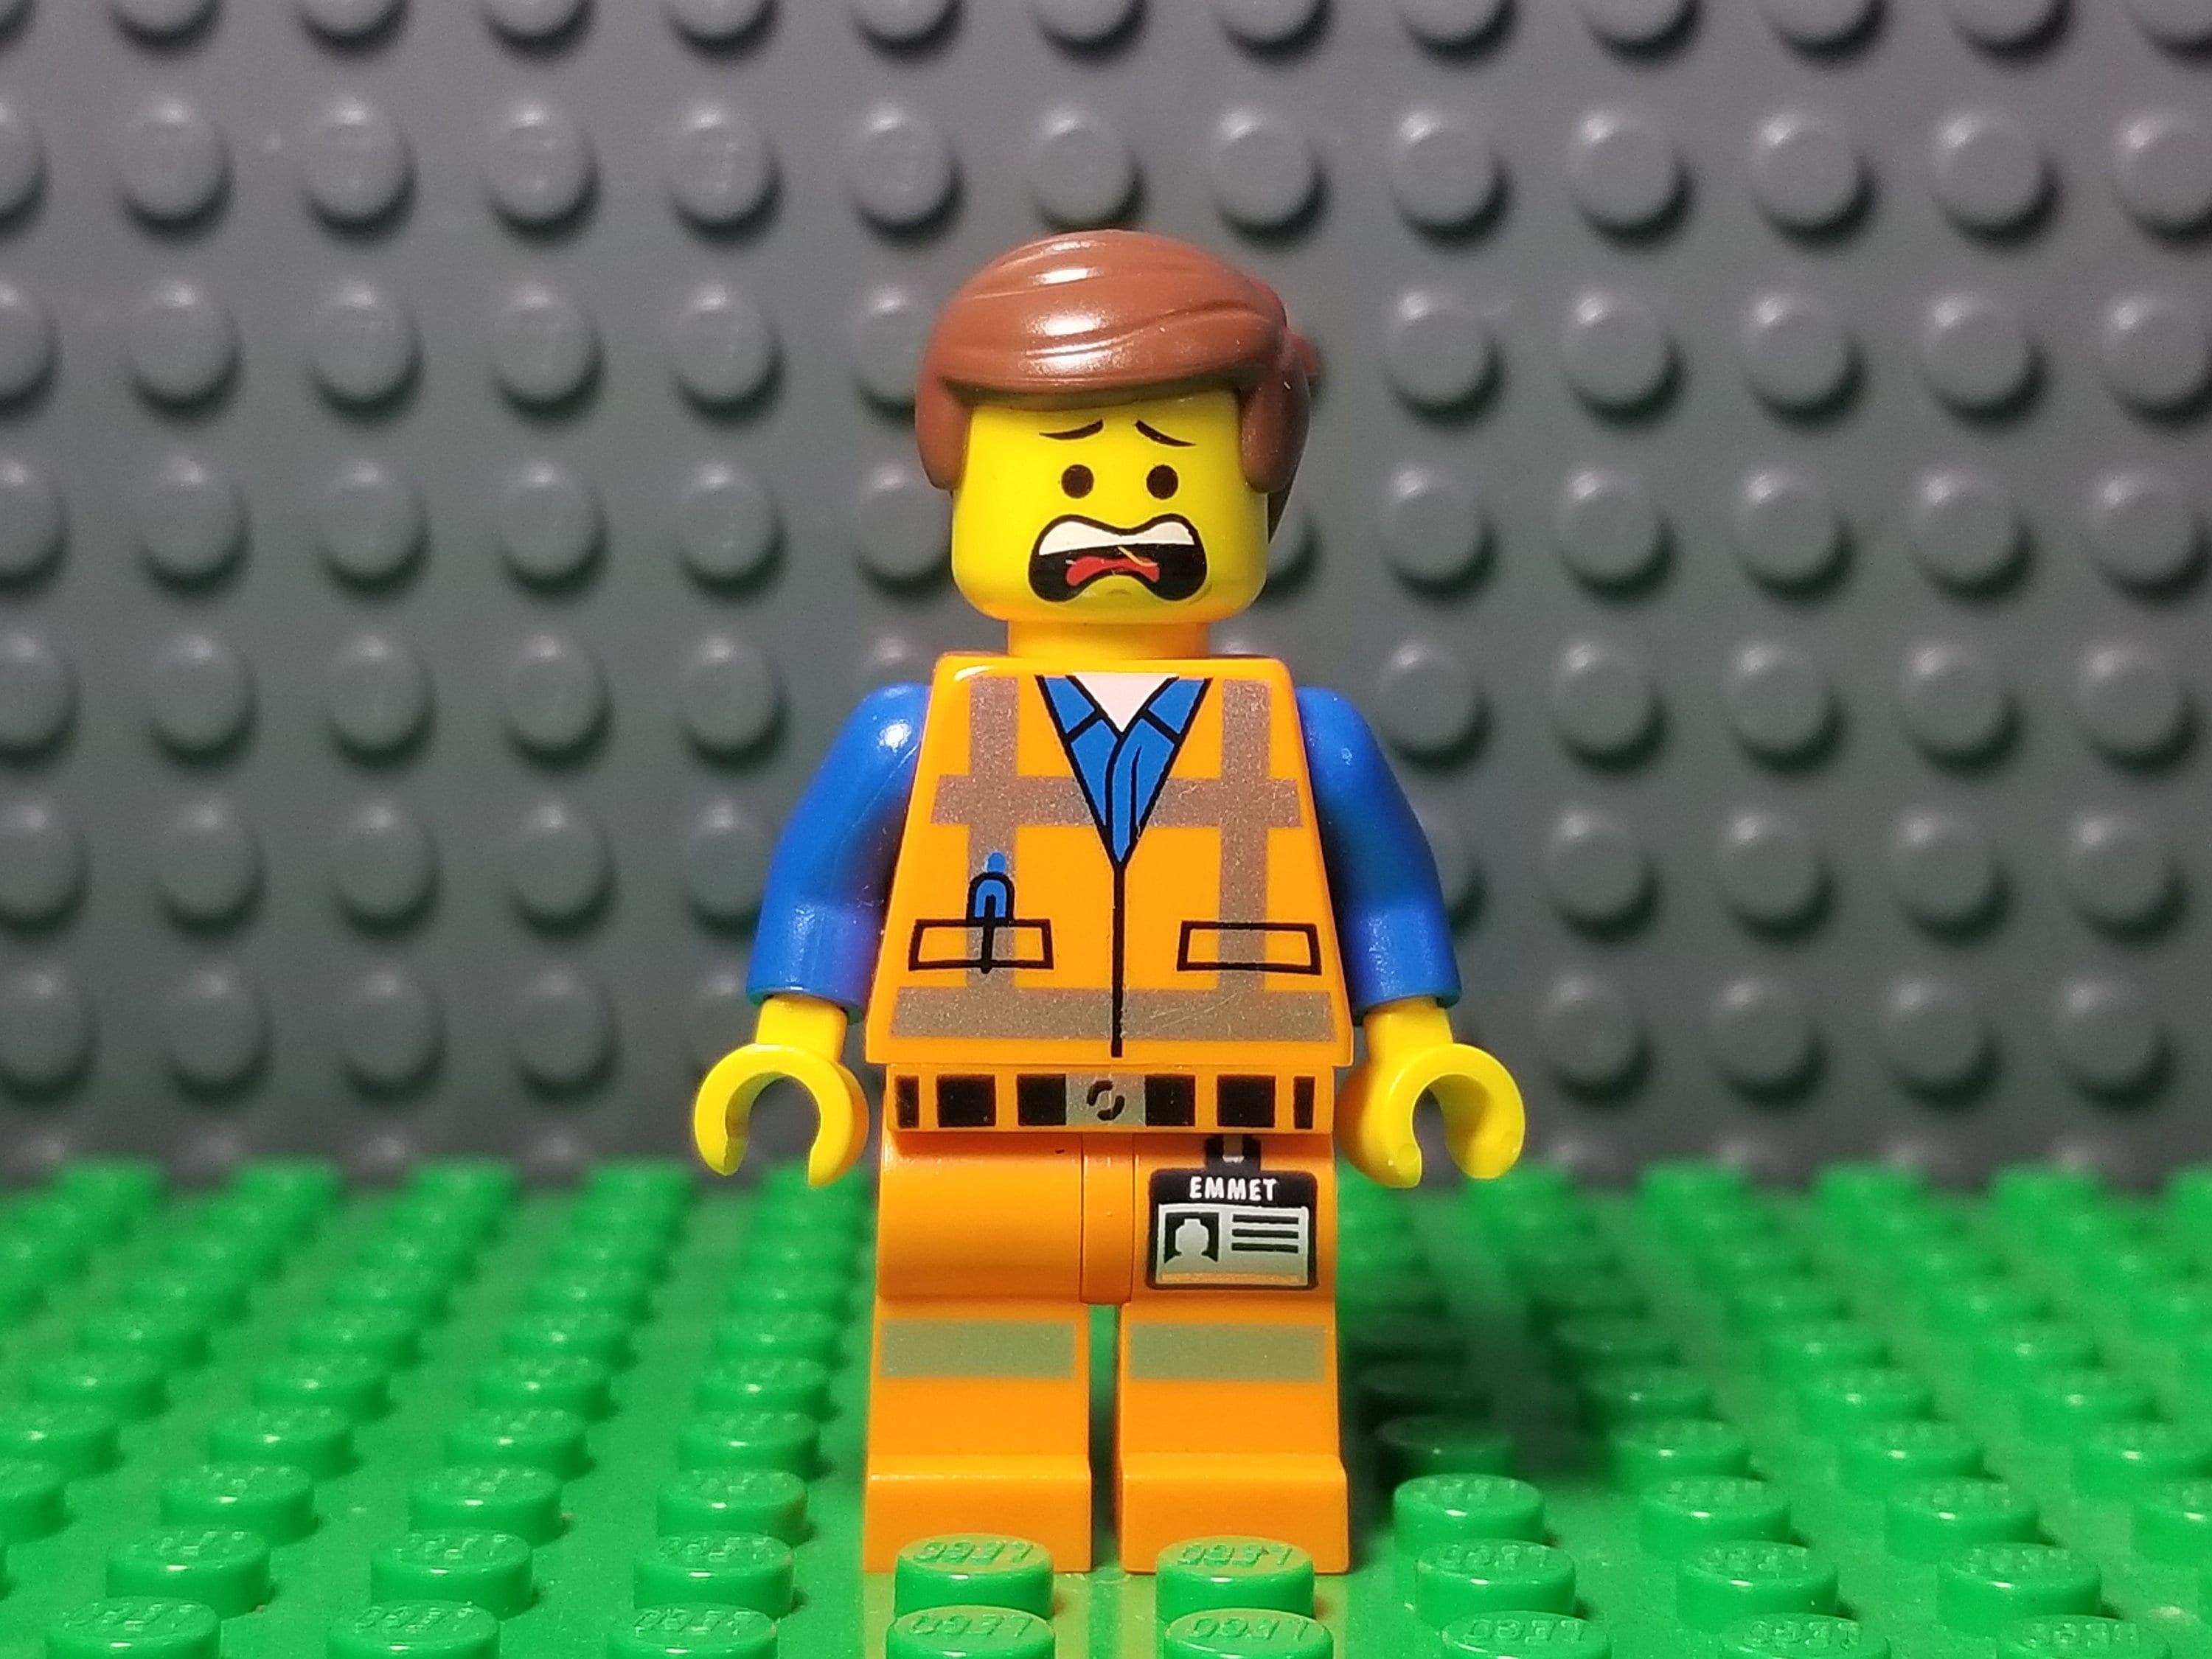 1691 Lego Figur Emmet aus Movie 